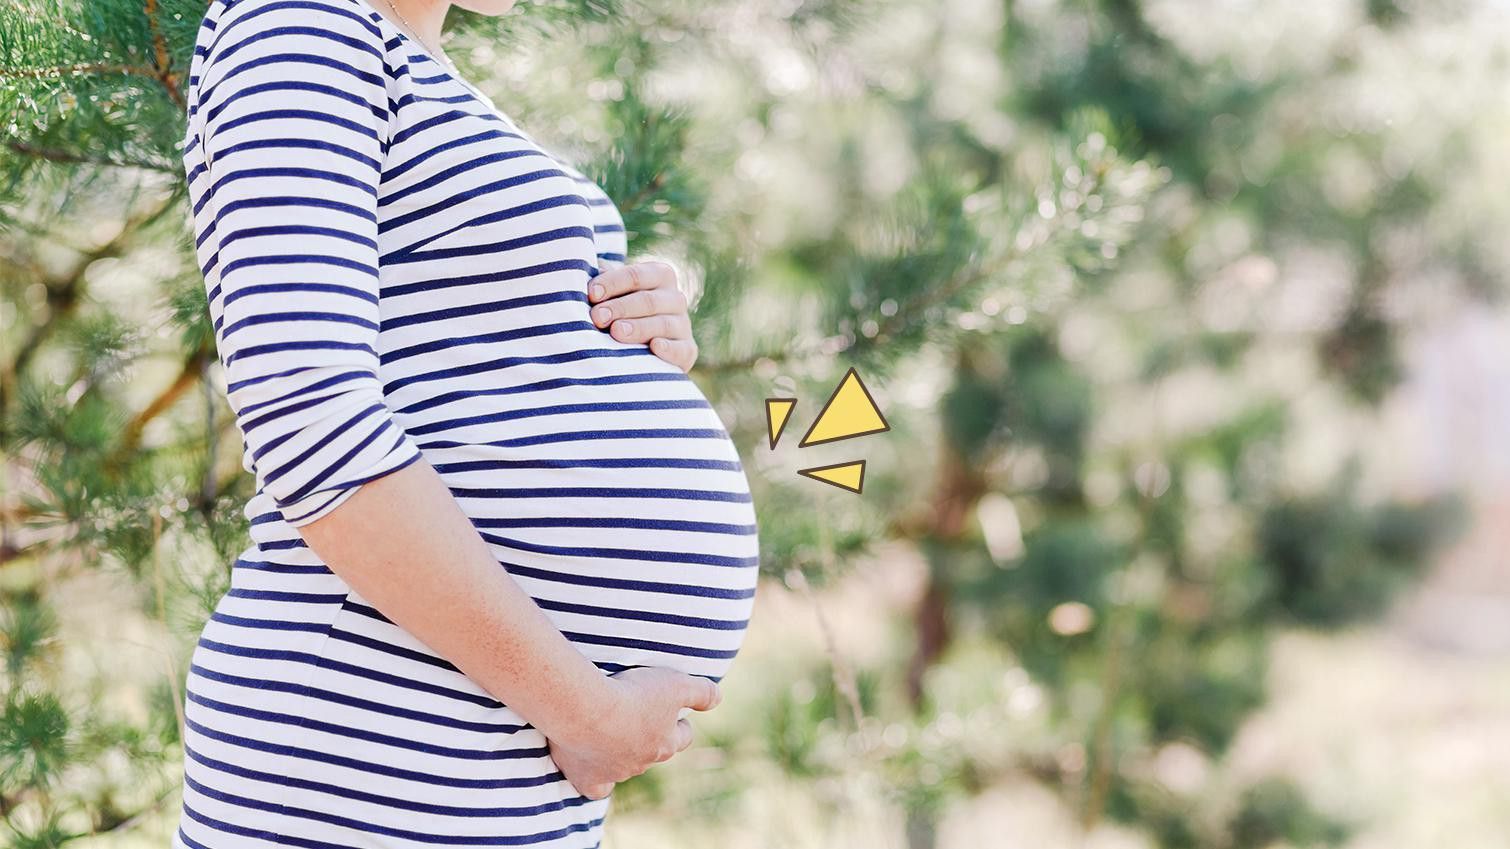 Berbahaya Bagi Kehamilan, Ini 5 Cara Menghindari Polusi